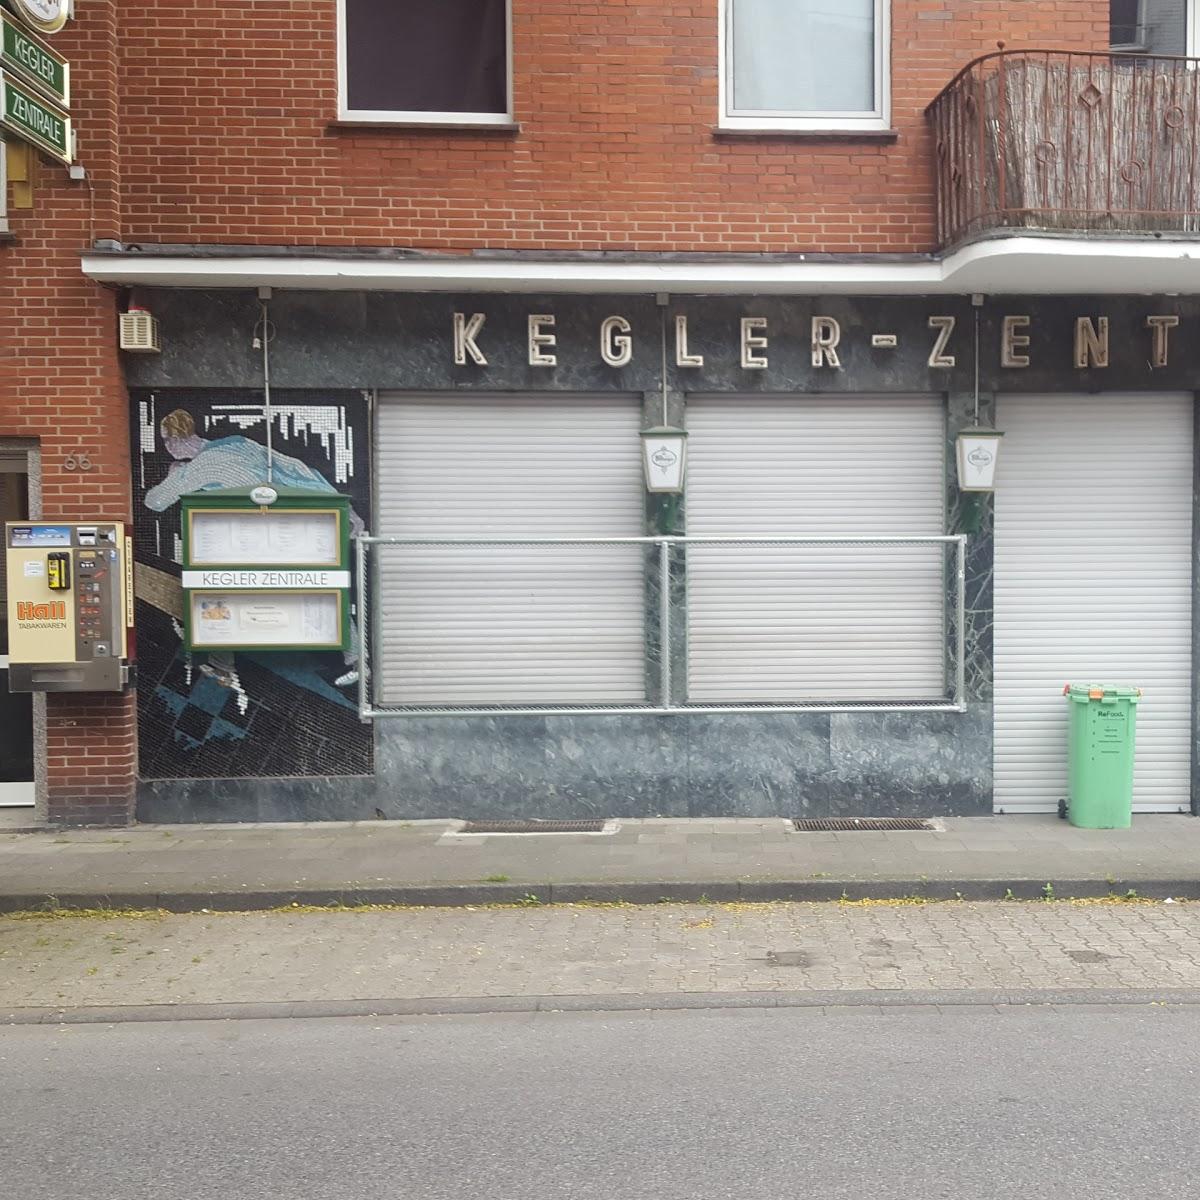 Restaurant "Restaurant Keglerzentrale" in Aachen